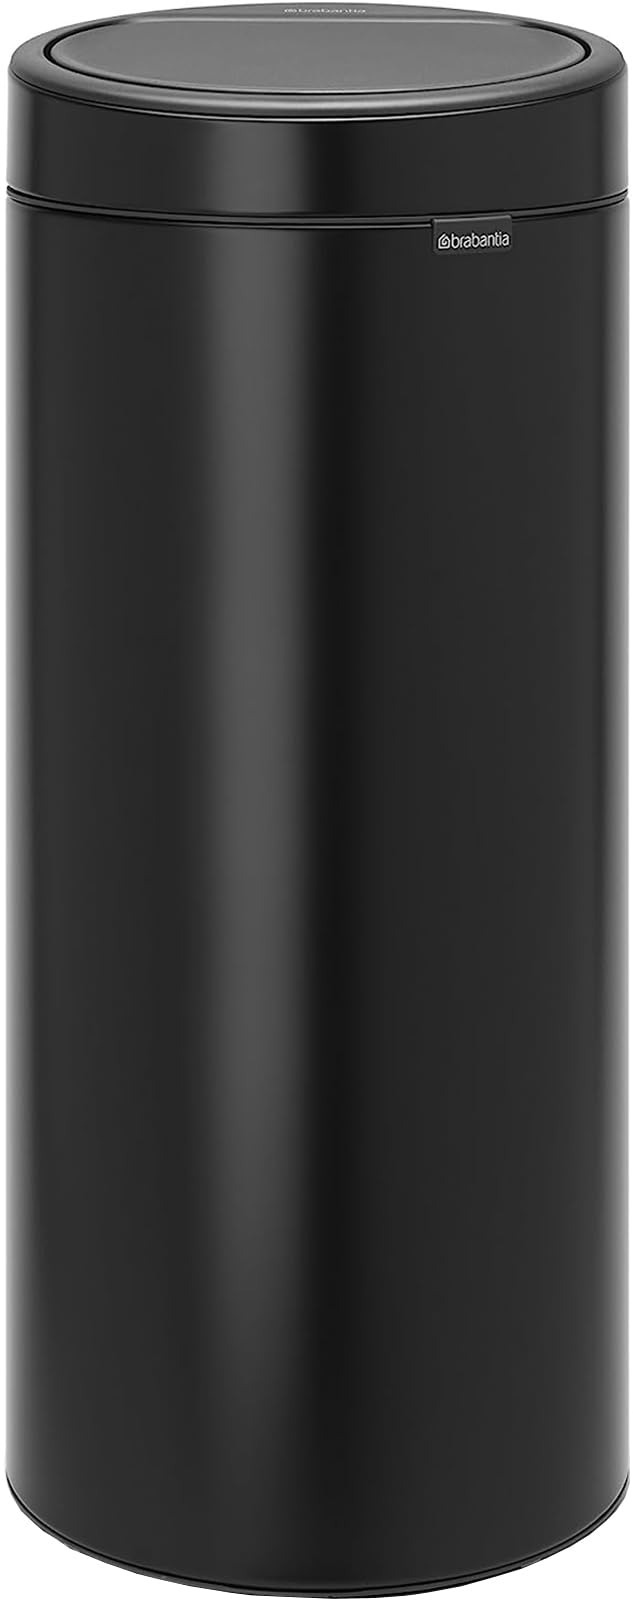 Brabantia 115301 Touch Bin New mit herausnehmbaren Kunststoffeinsatz, 30 L, Edelstahl, schwarz matt, 32.8 x 32.8 cm